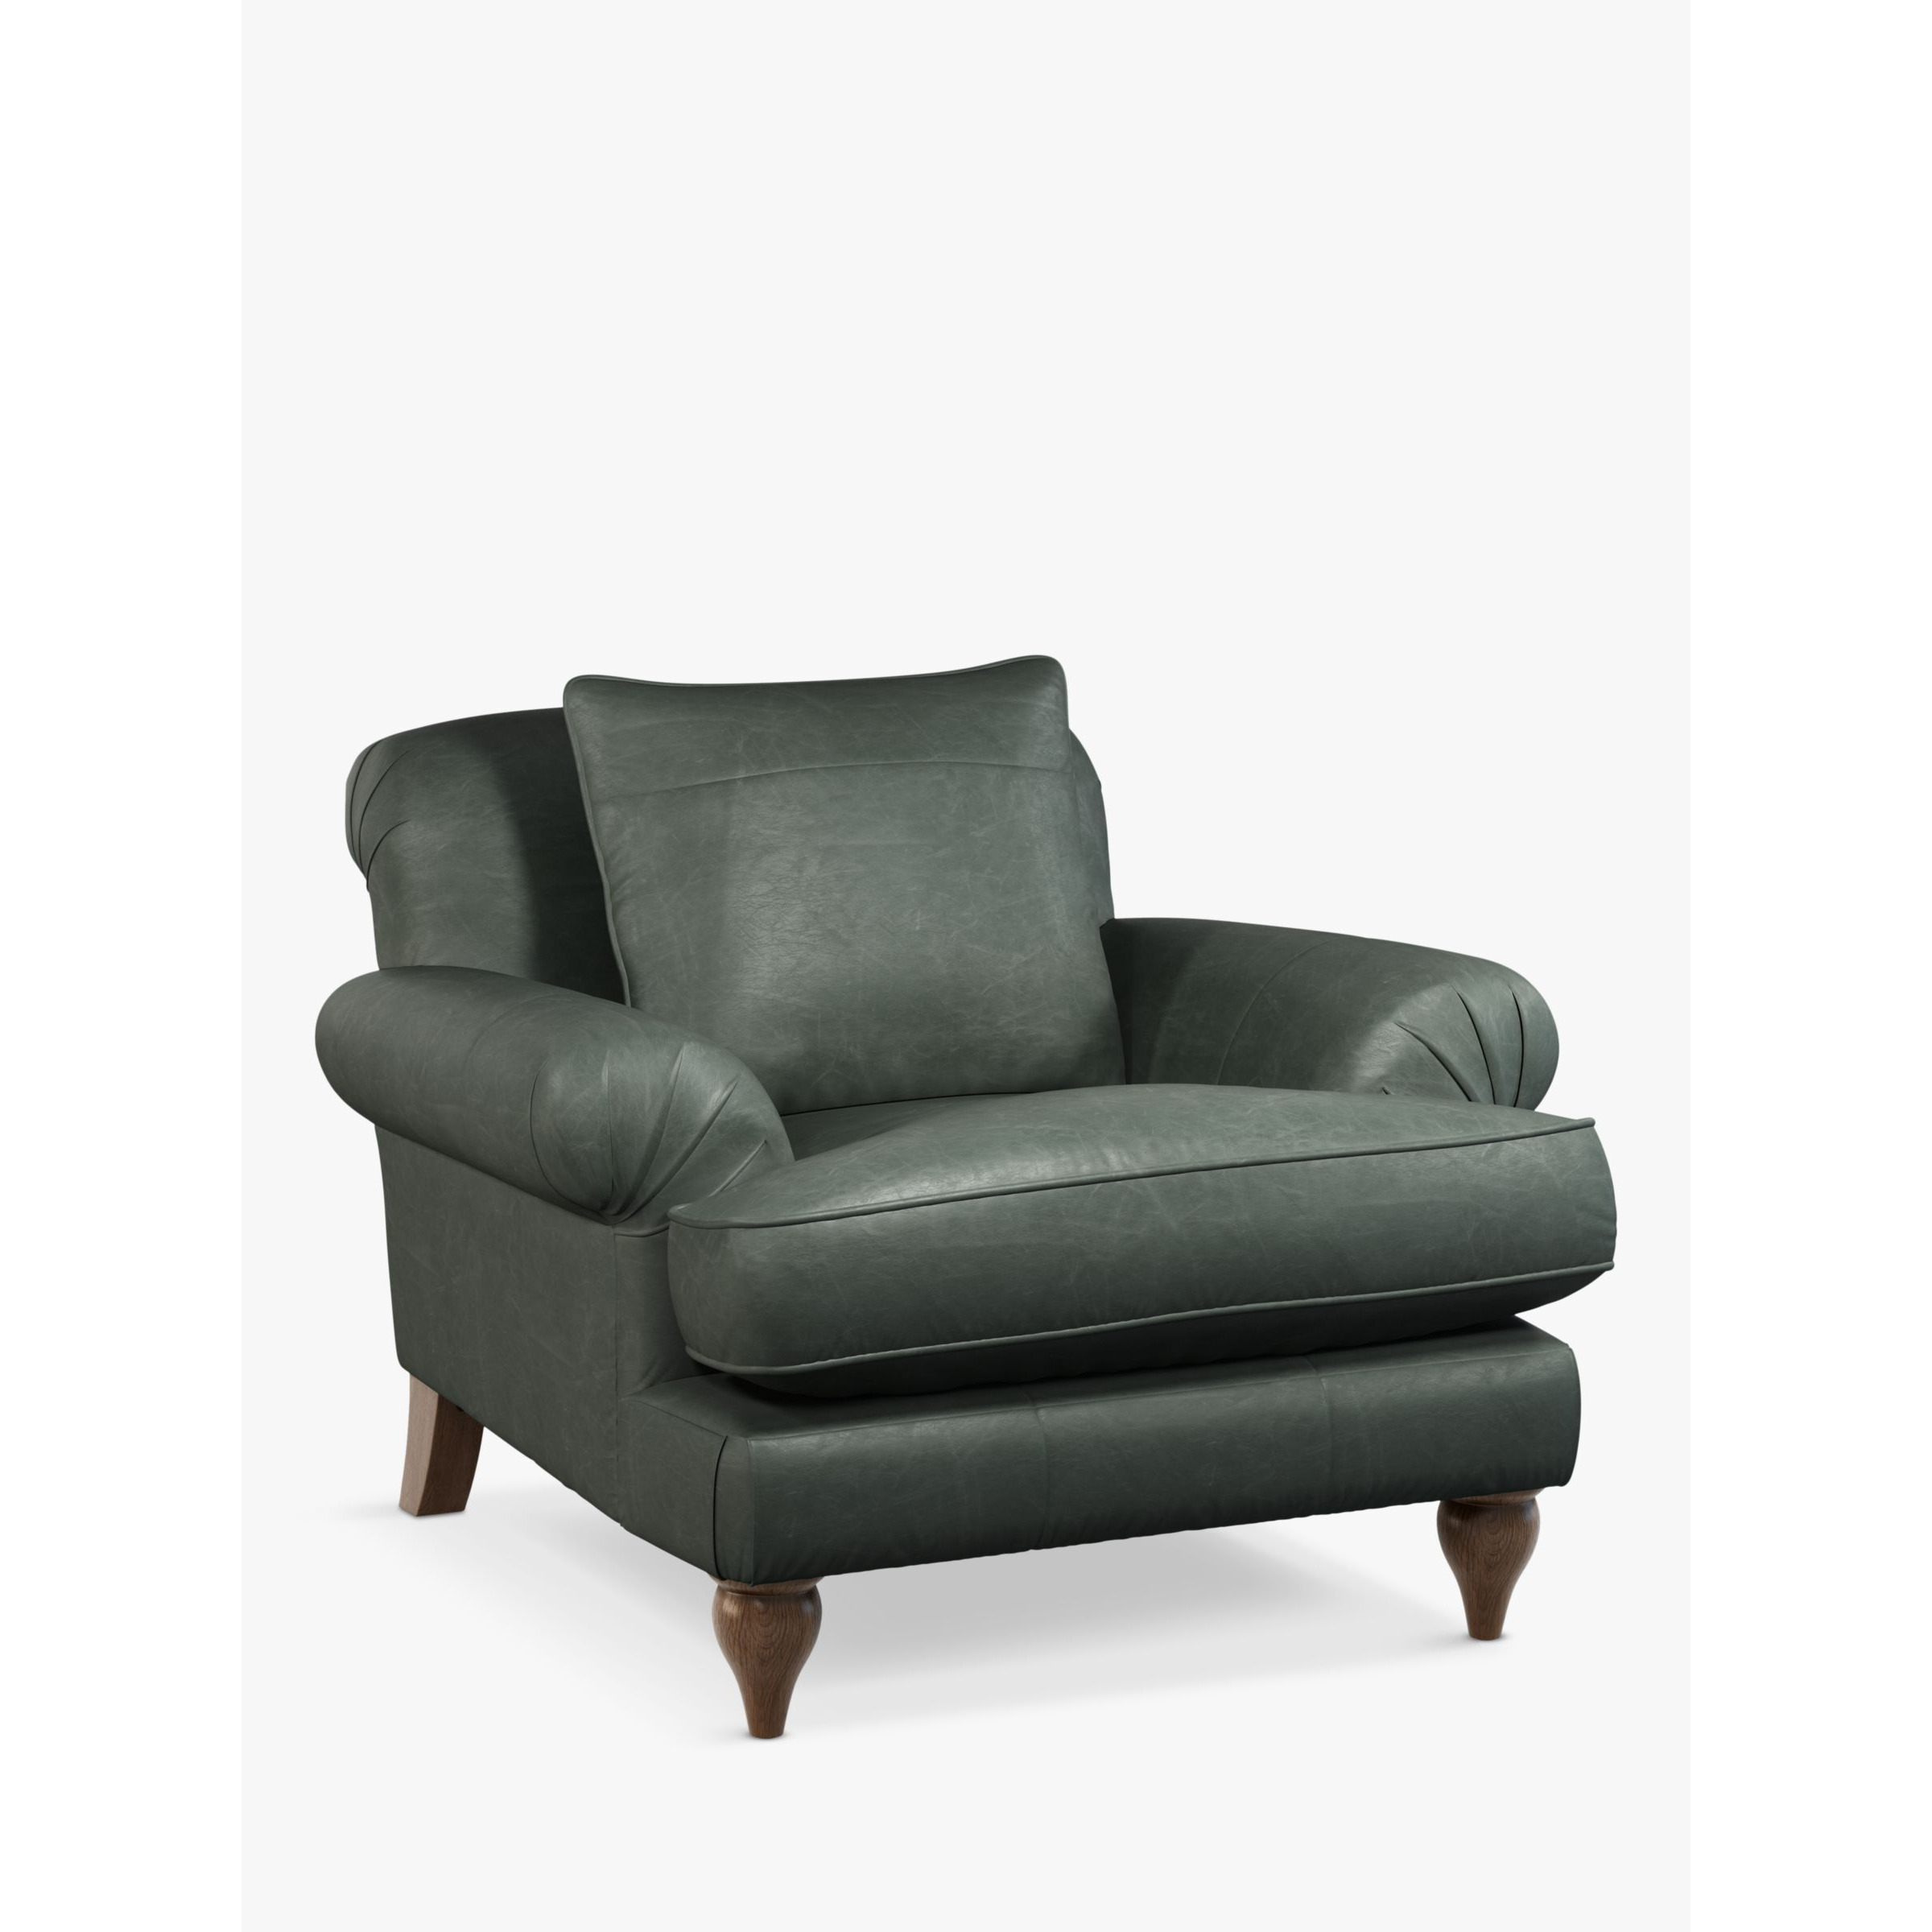 John Lewis Findon Leather Armchair, Dark Leg - image 1